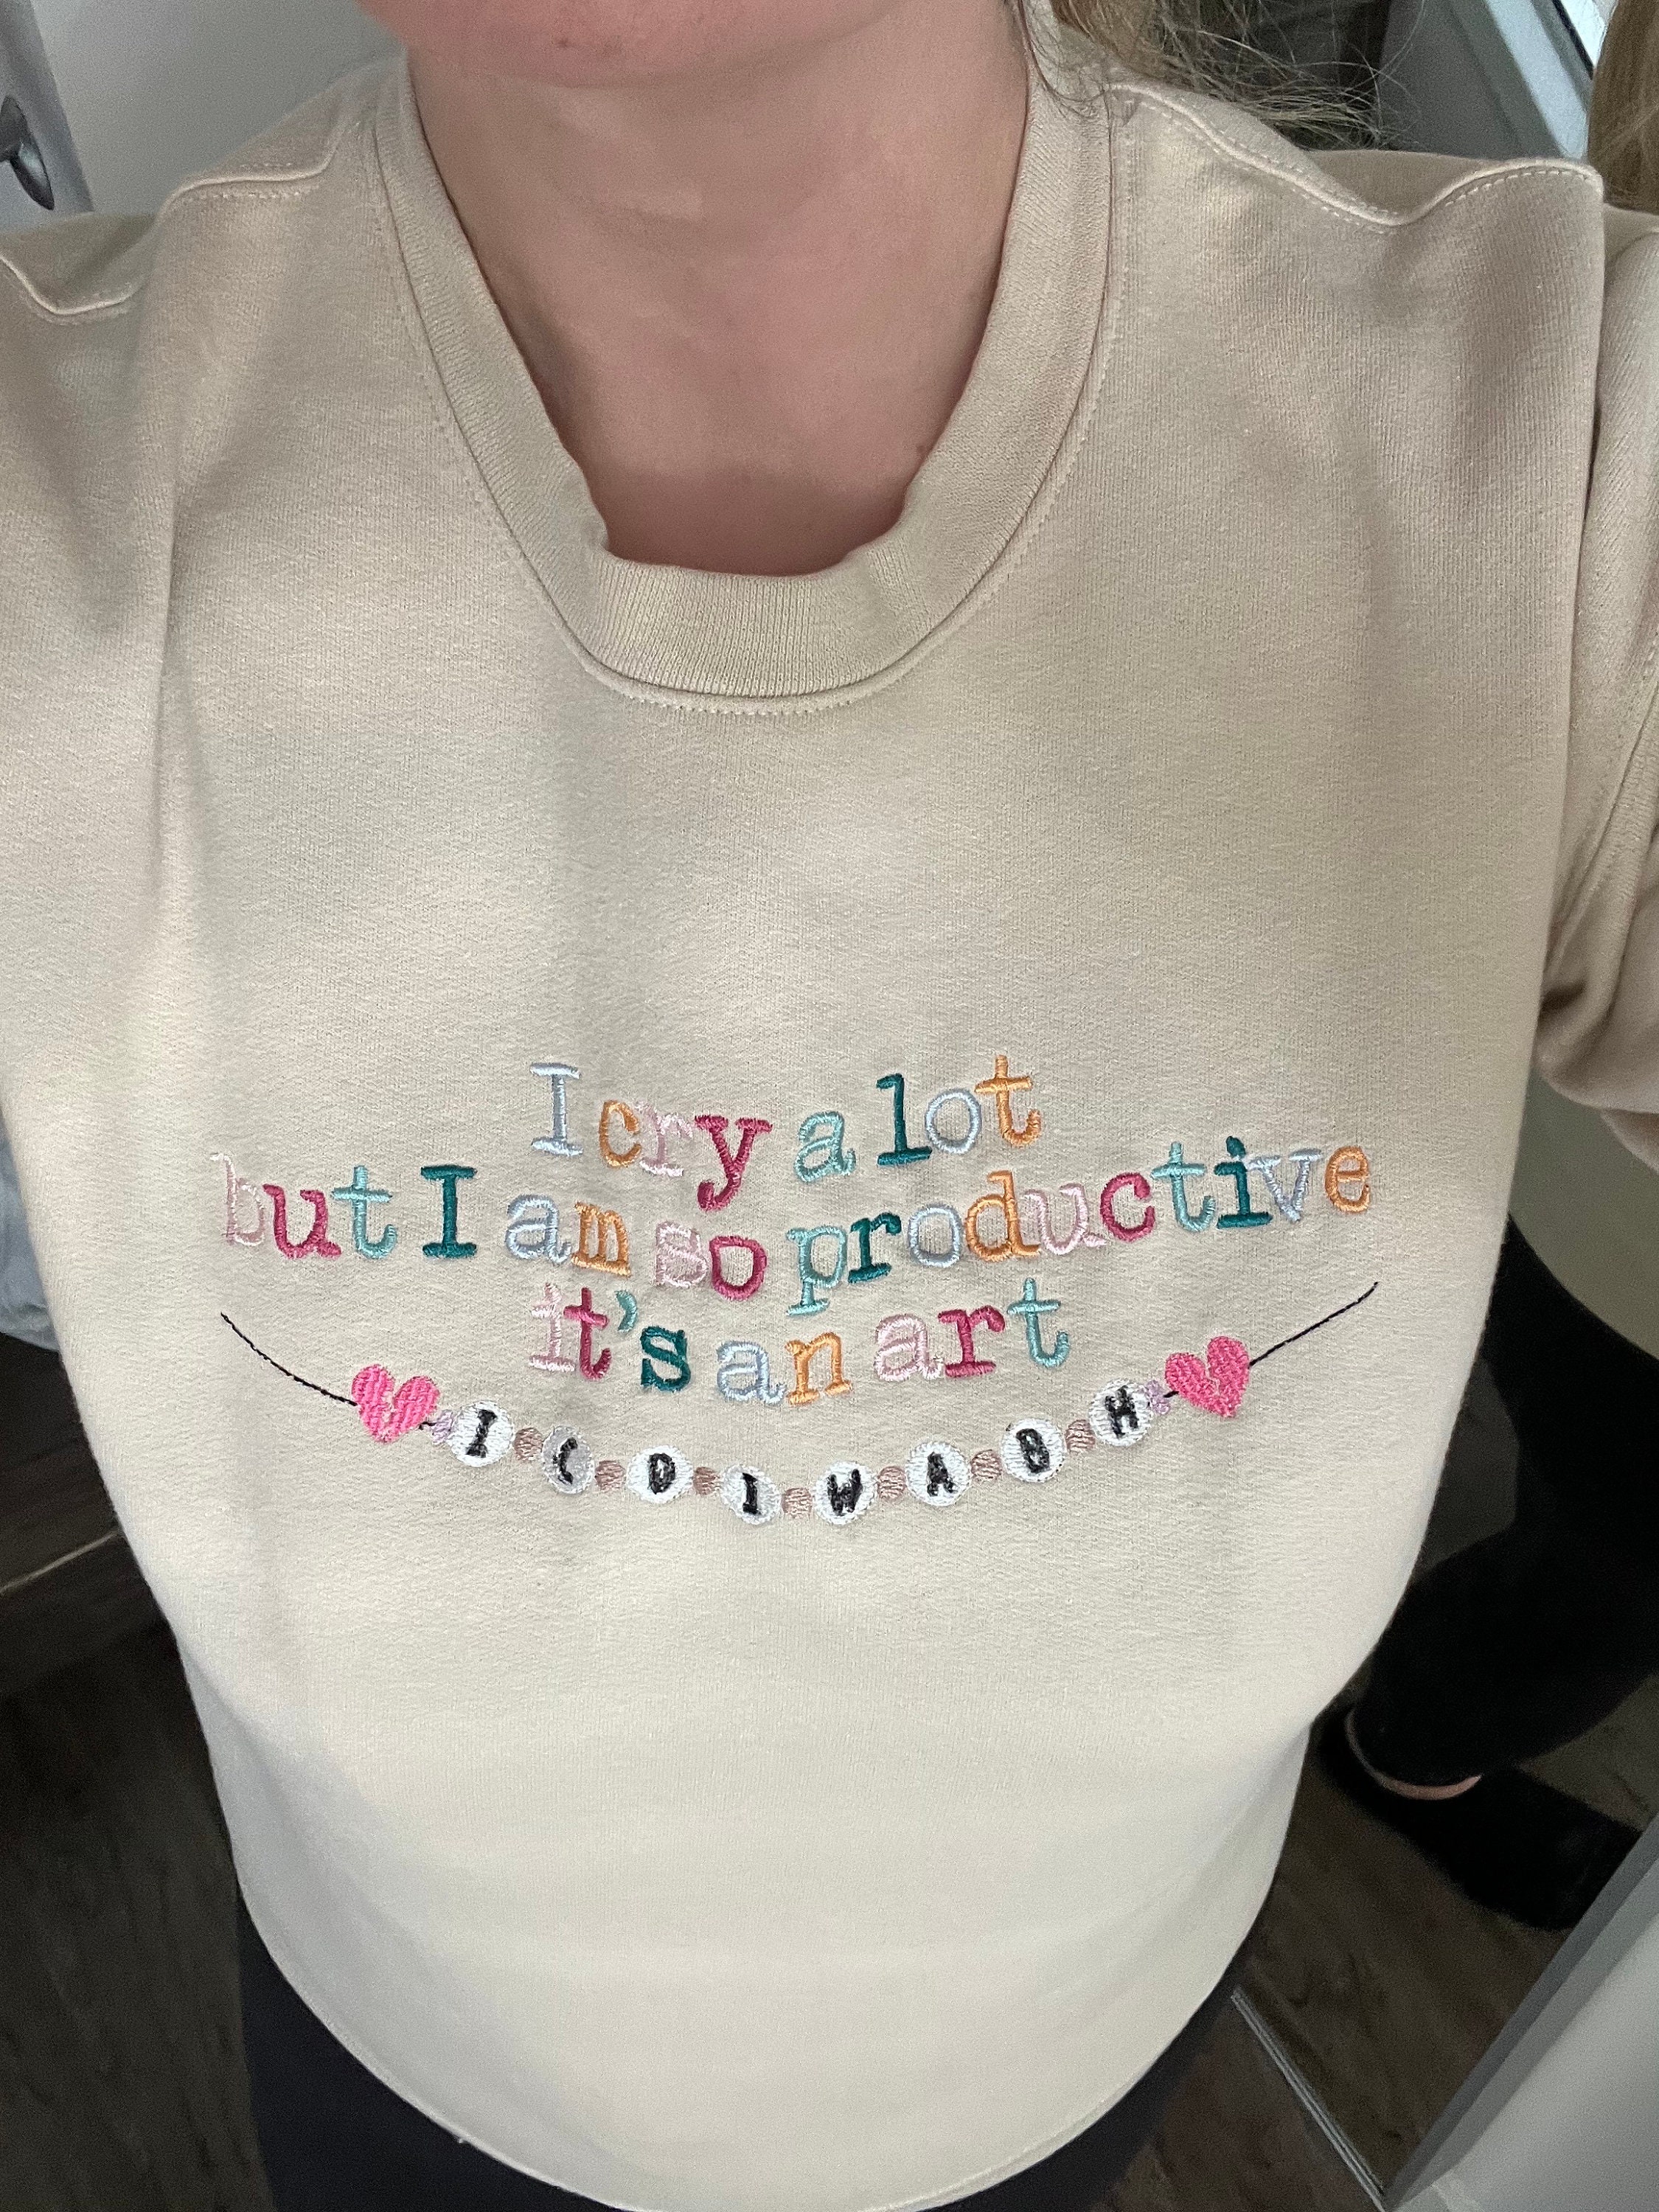 I cry a lot but I am so productive its an art Embroidered Crewneck Sweatshirt